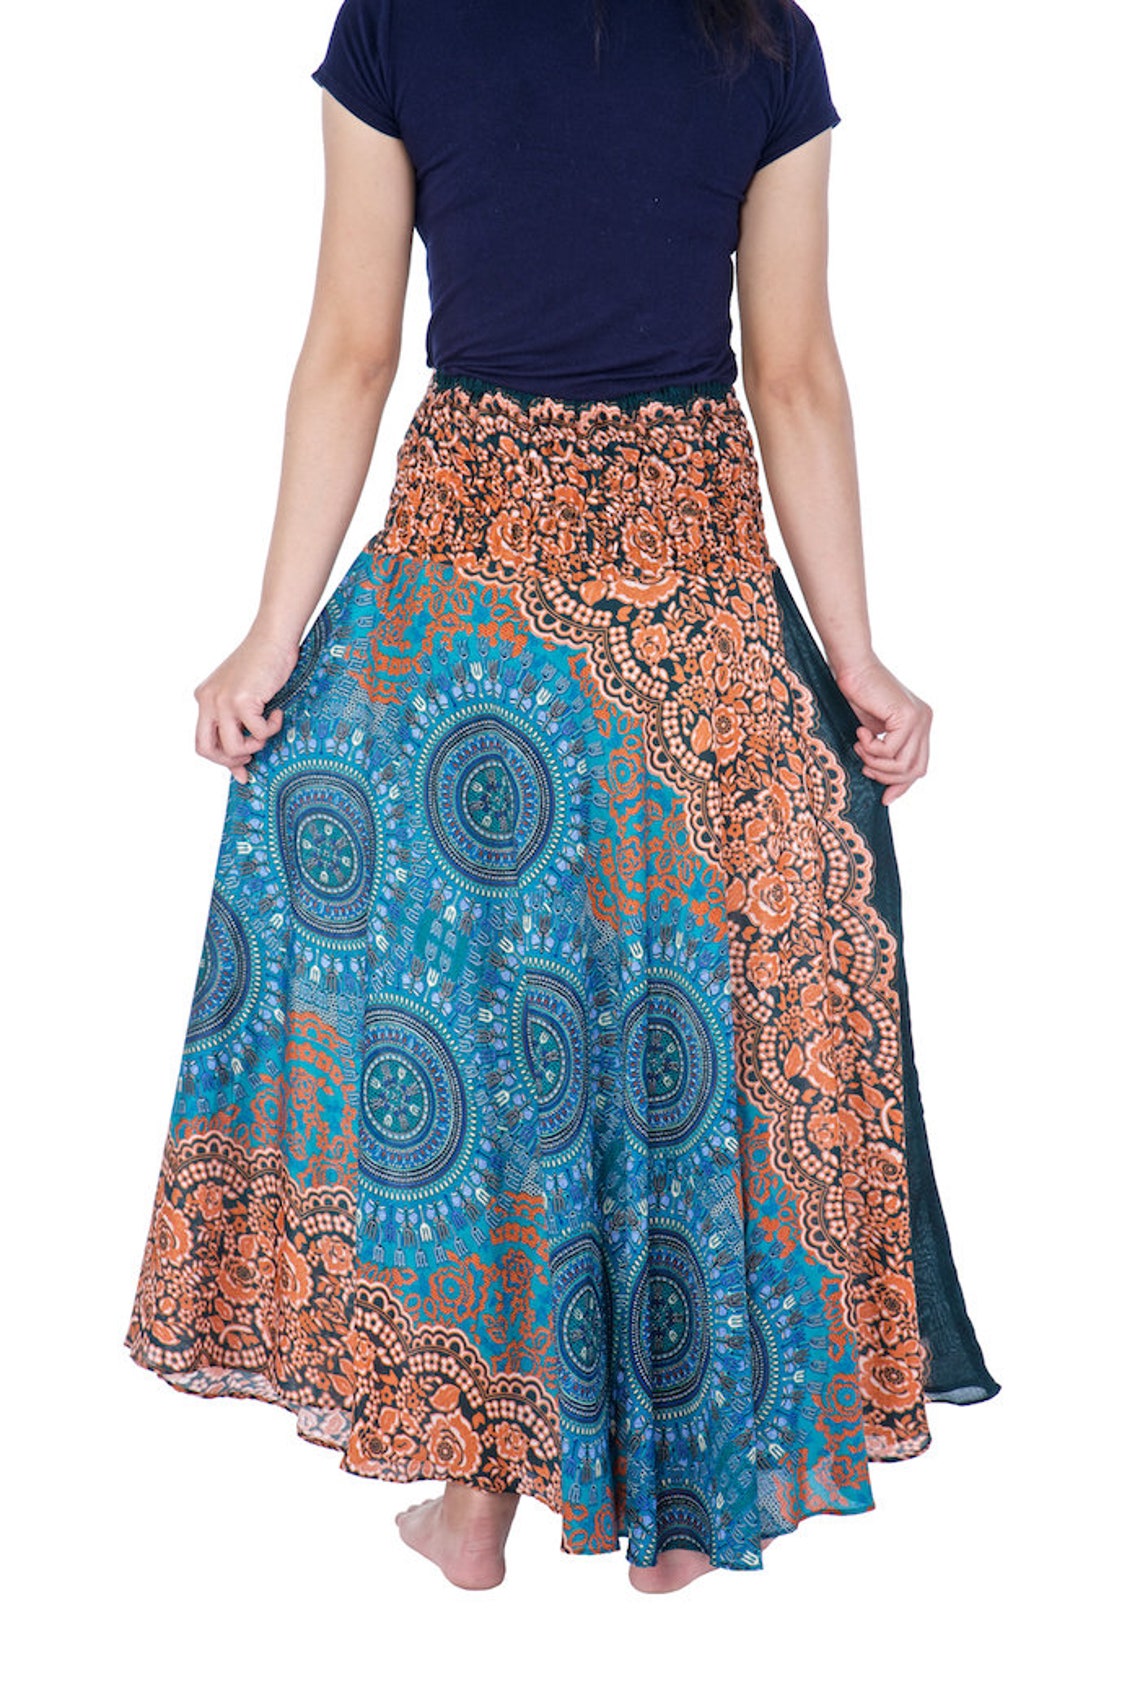 WOMENS LONG TEAL Maxi Skirt Bohemian Gypsy Hippie Style | Etsy